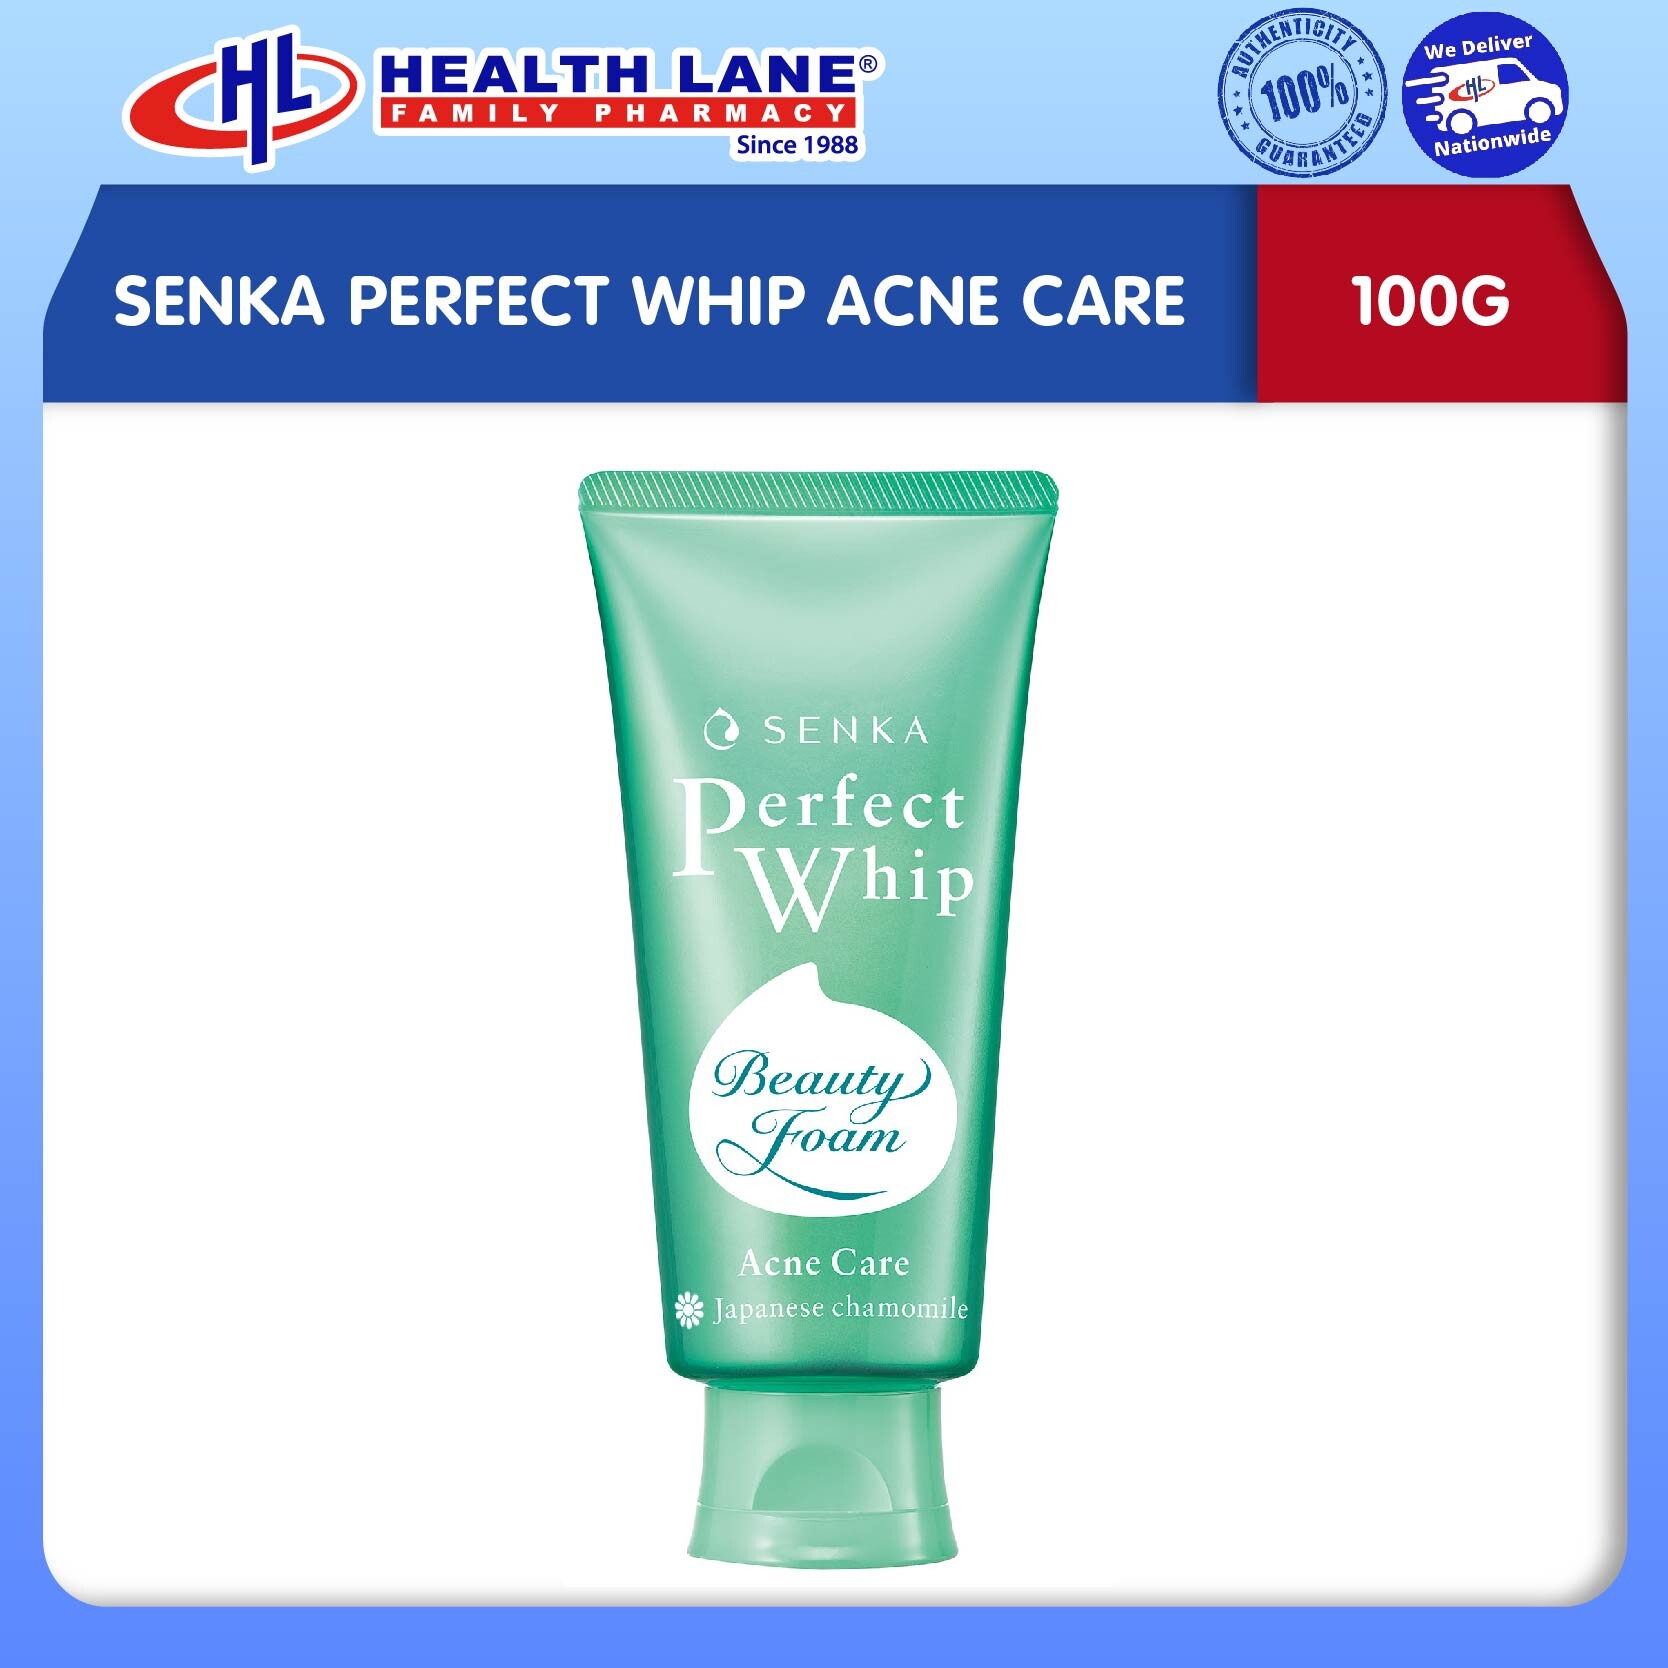 SENKA PERFECT WHIP ACNE CARE (100G)